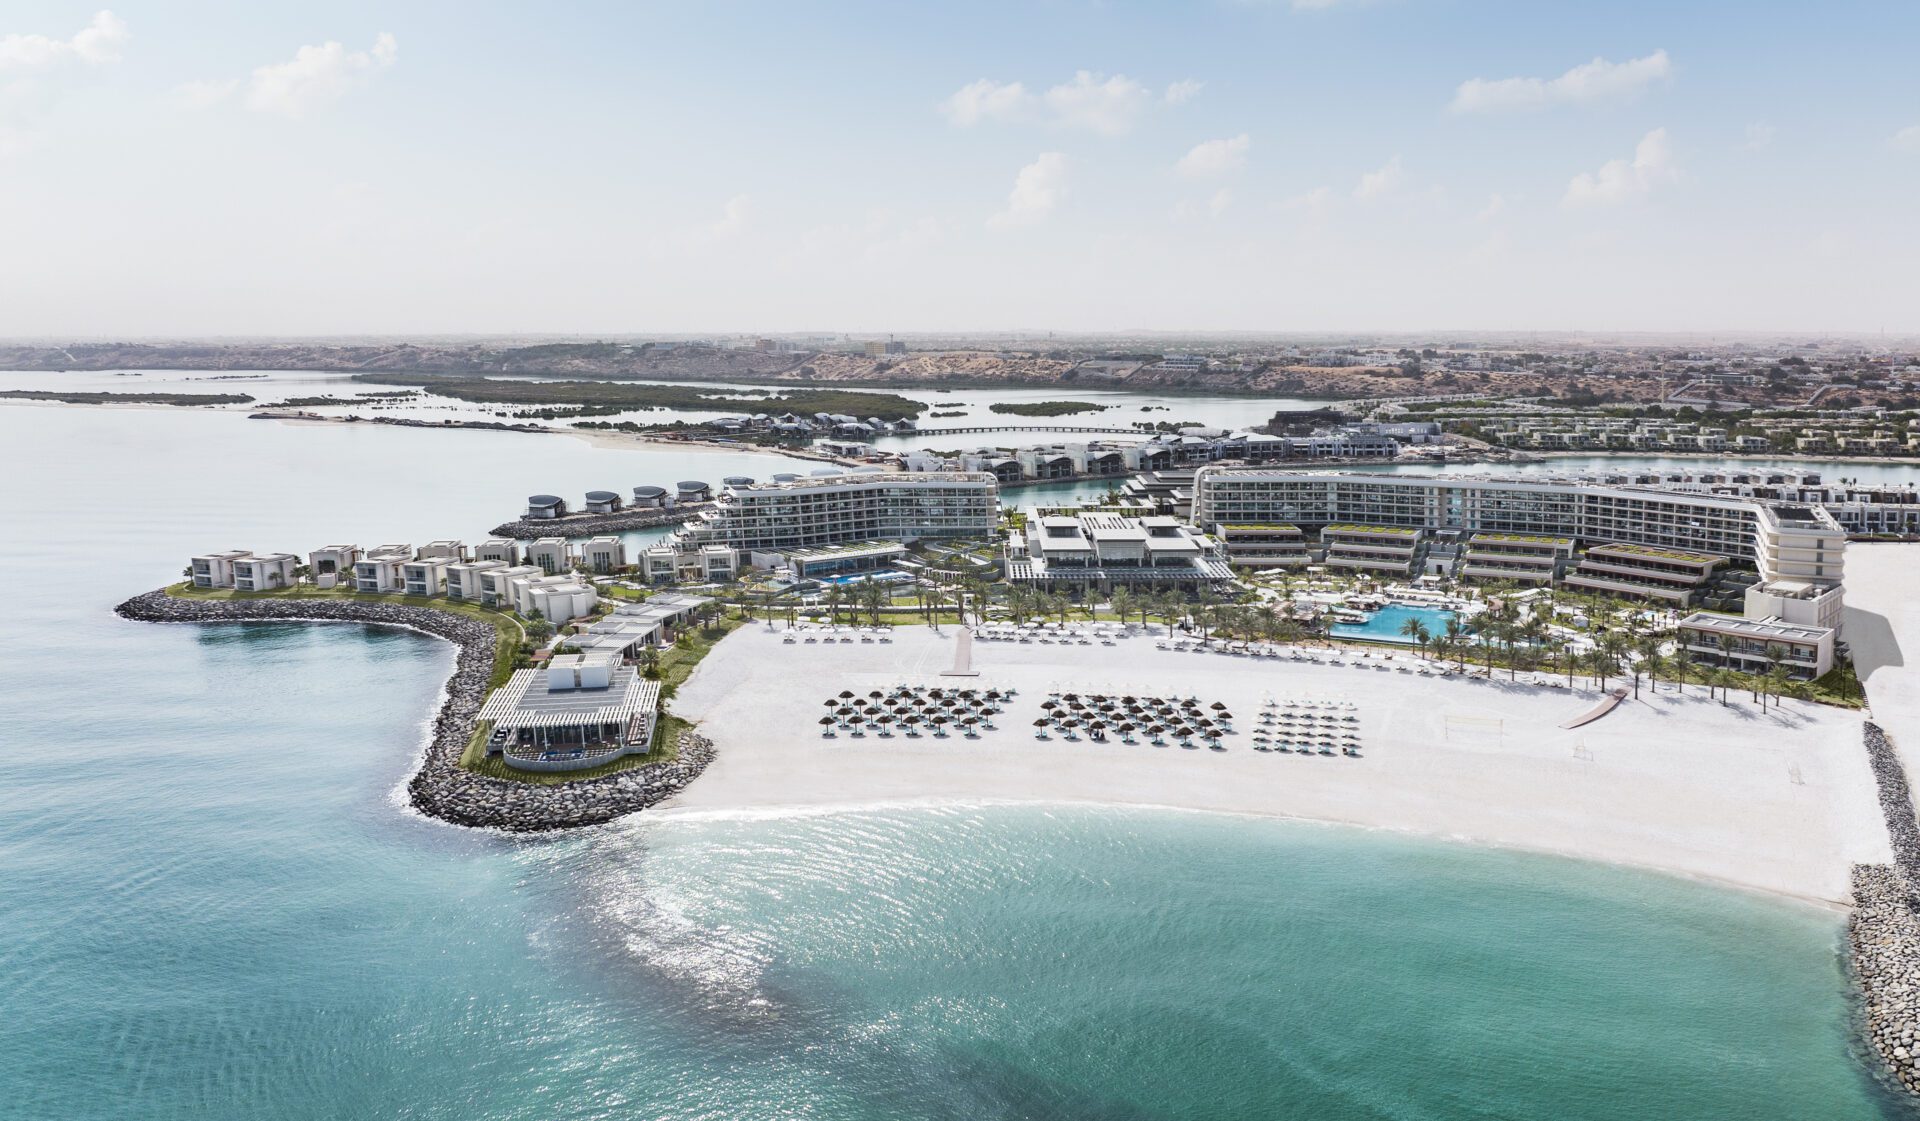 InterContinental Ras Al Khaimah Resort and Spa - Fact Sheet